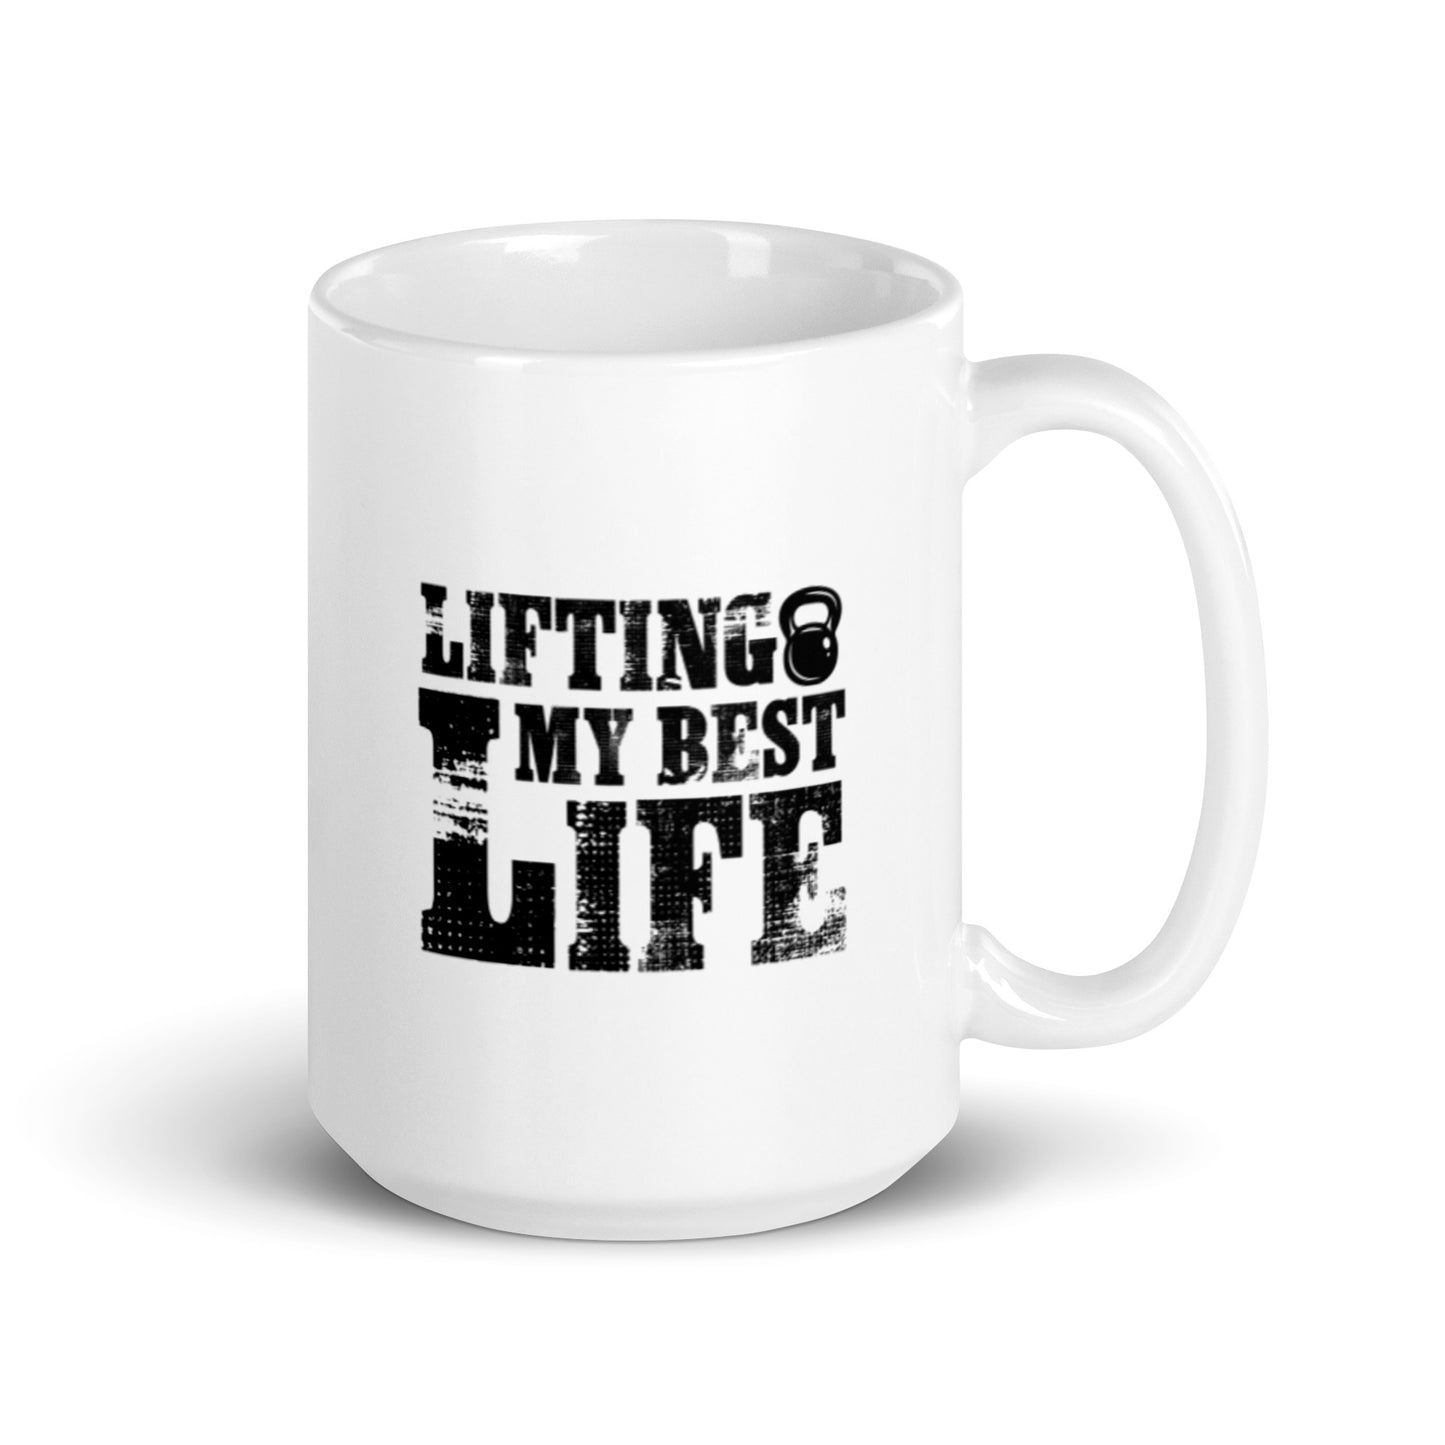 Lifting My Best Life White glossy mug